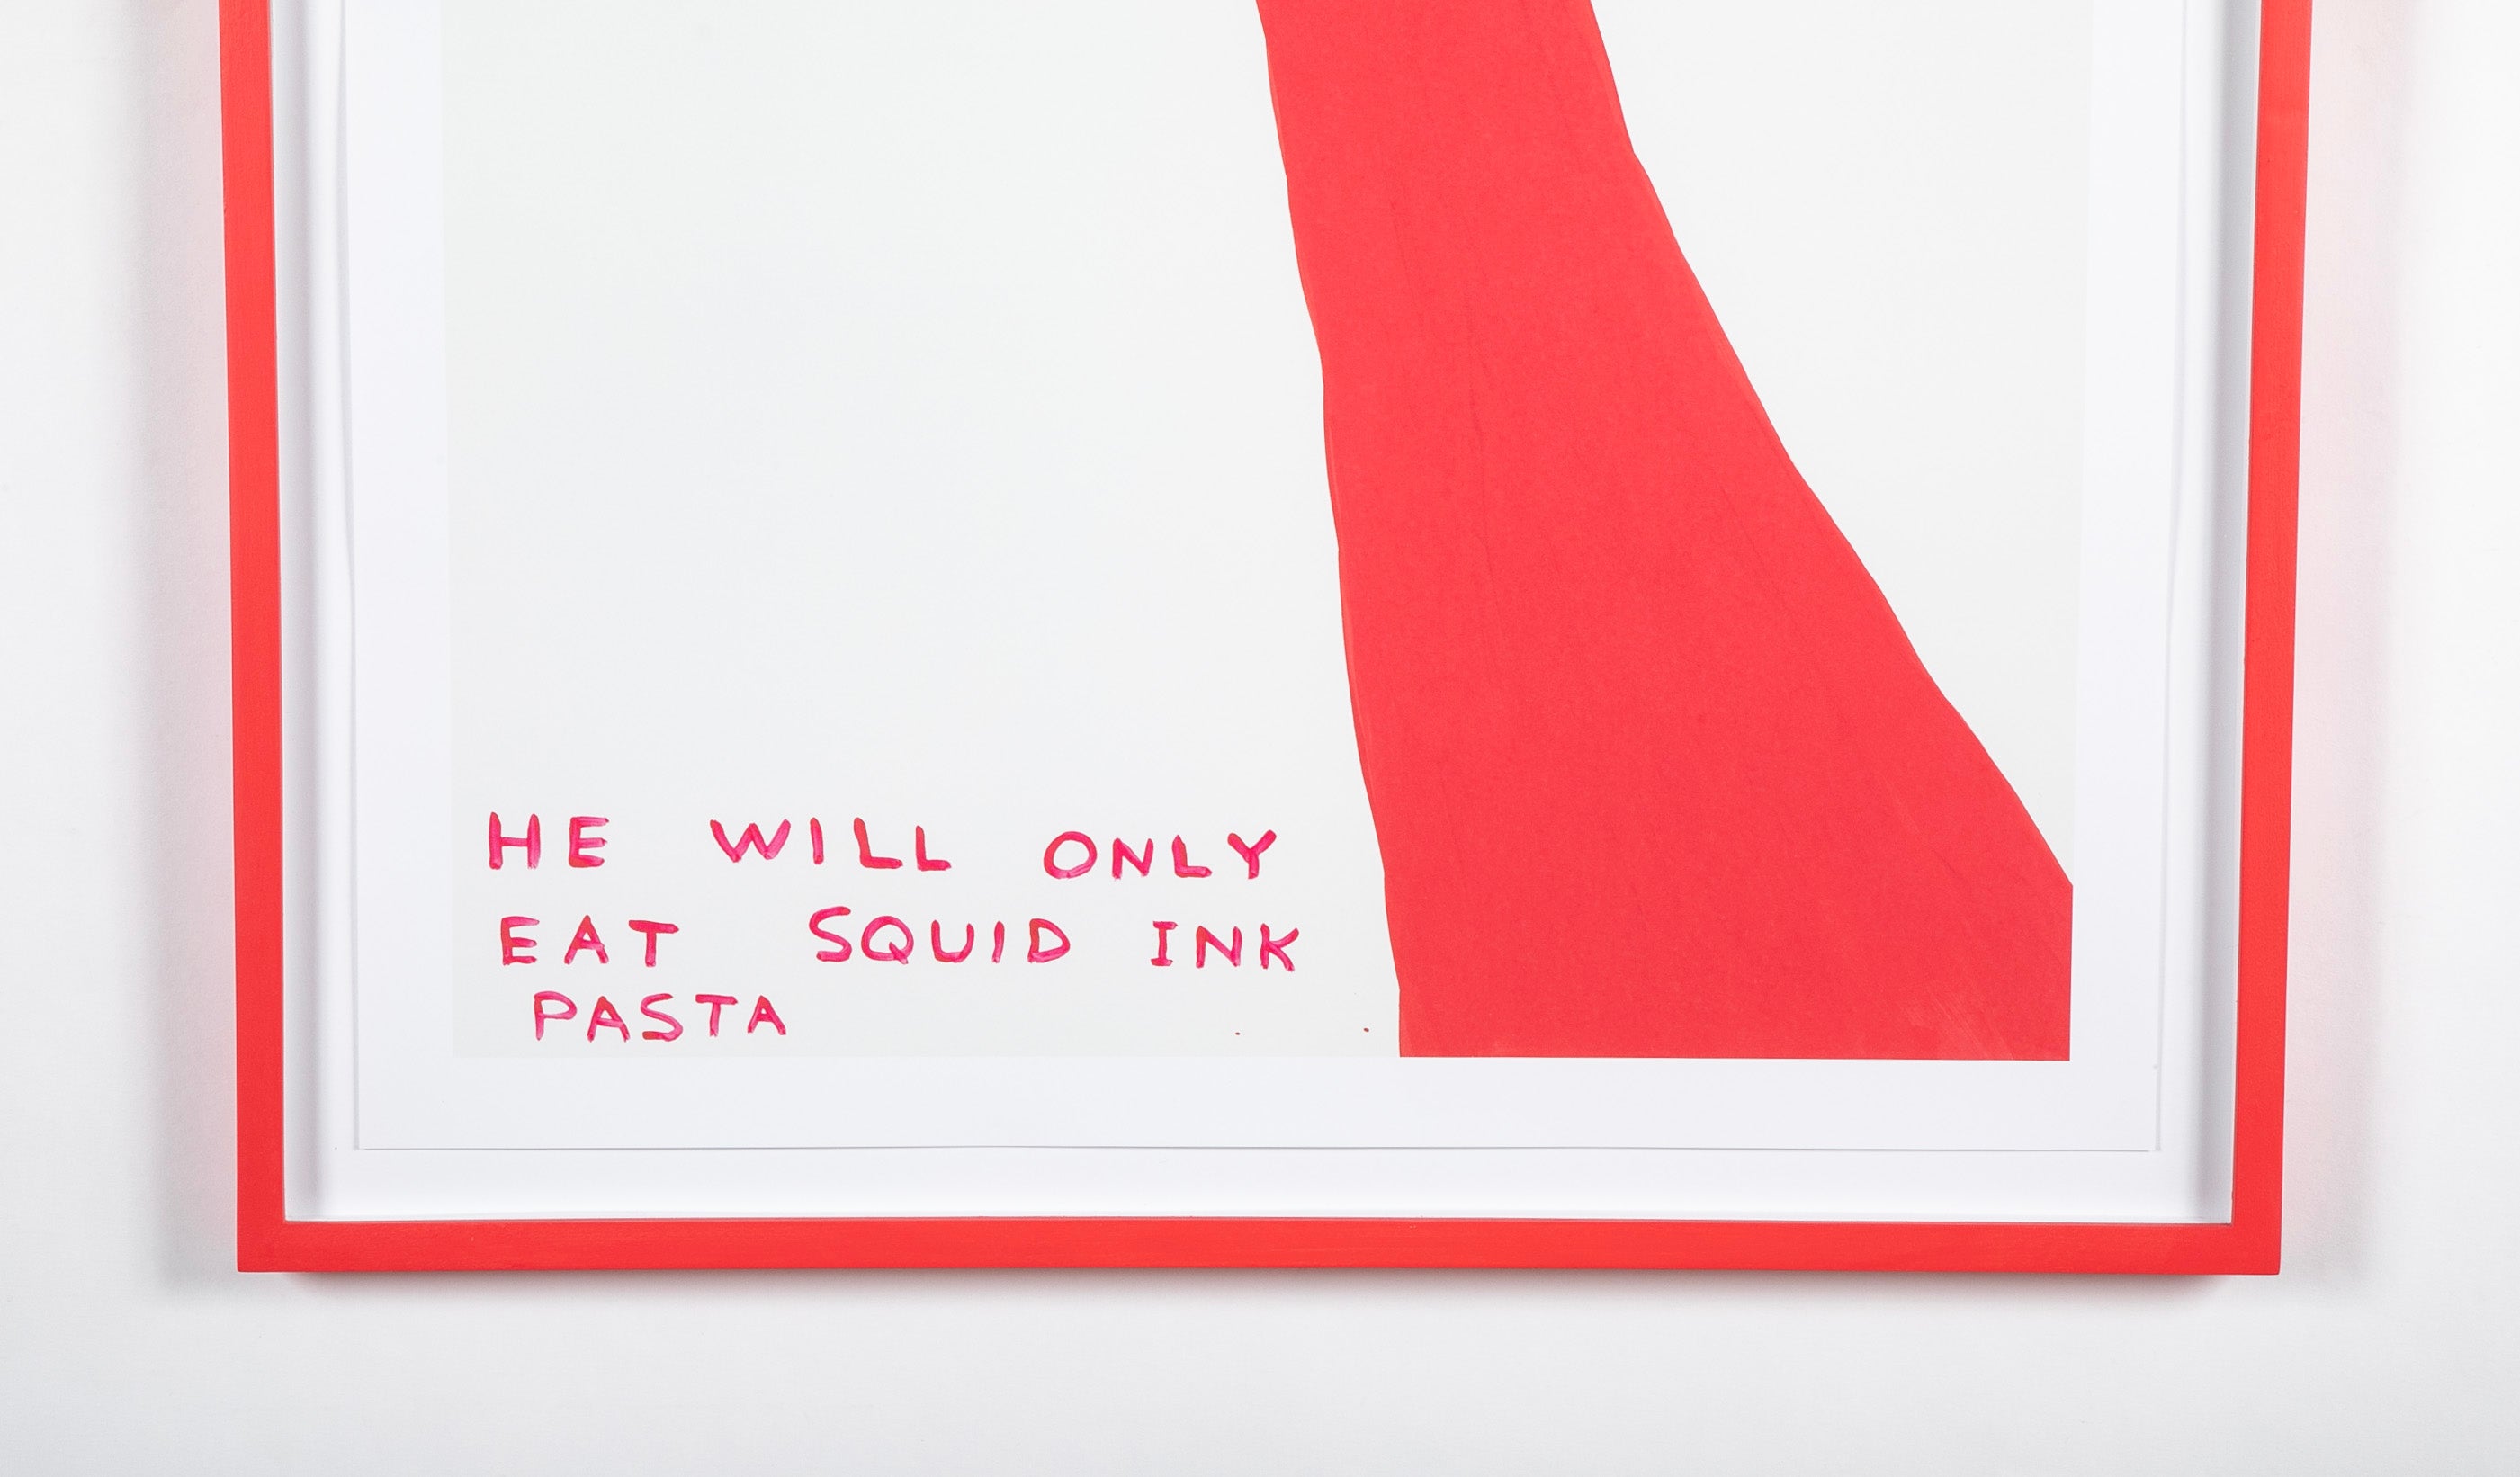 David Shrigley (b.1968) Print of Giraffe "He Will Only Eat Squid Ink Pasta"